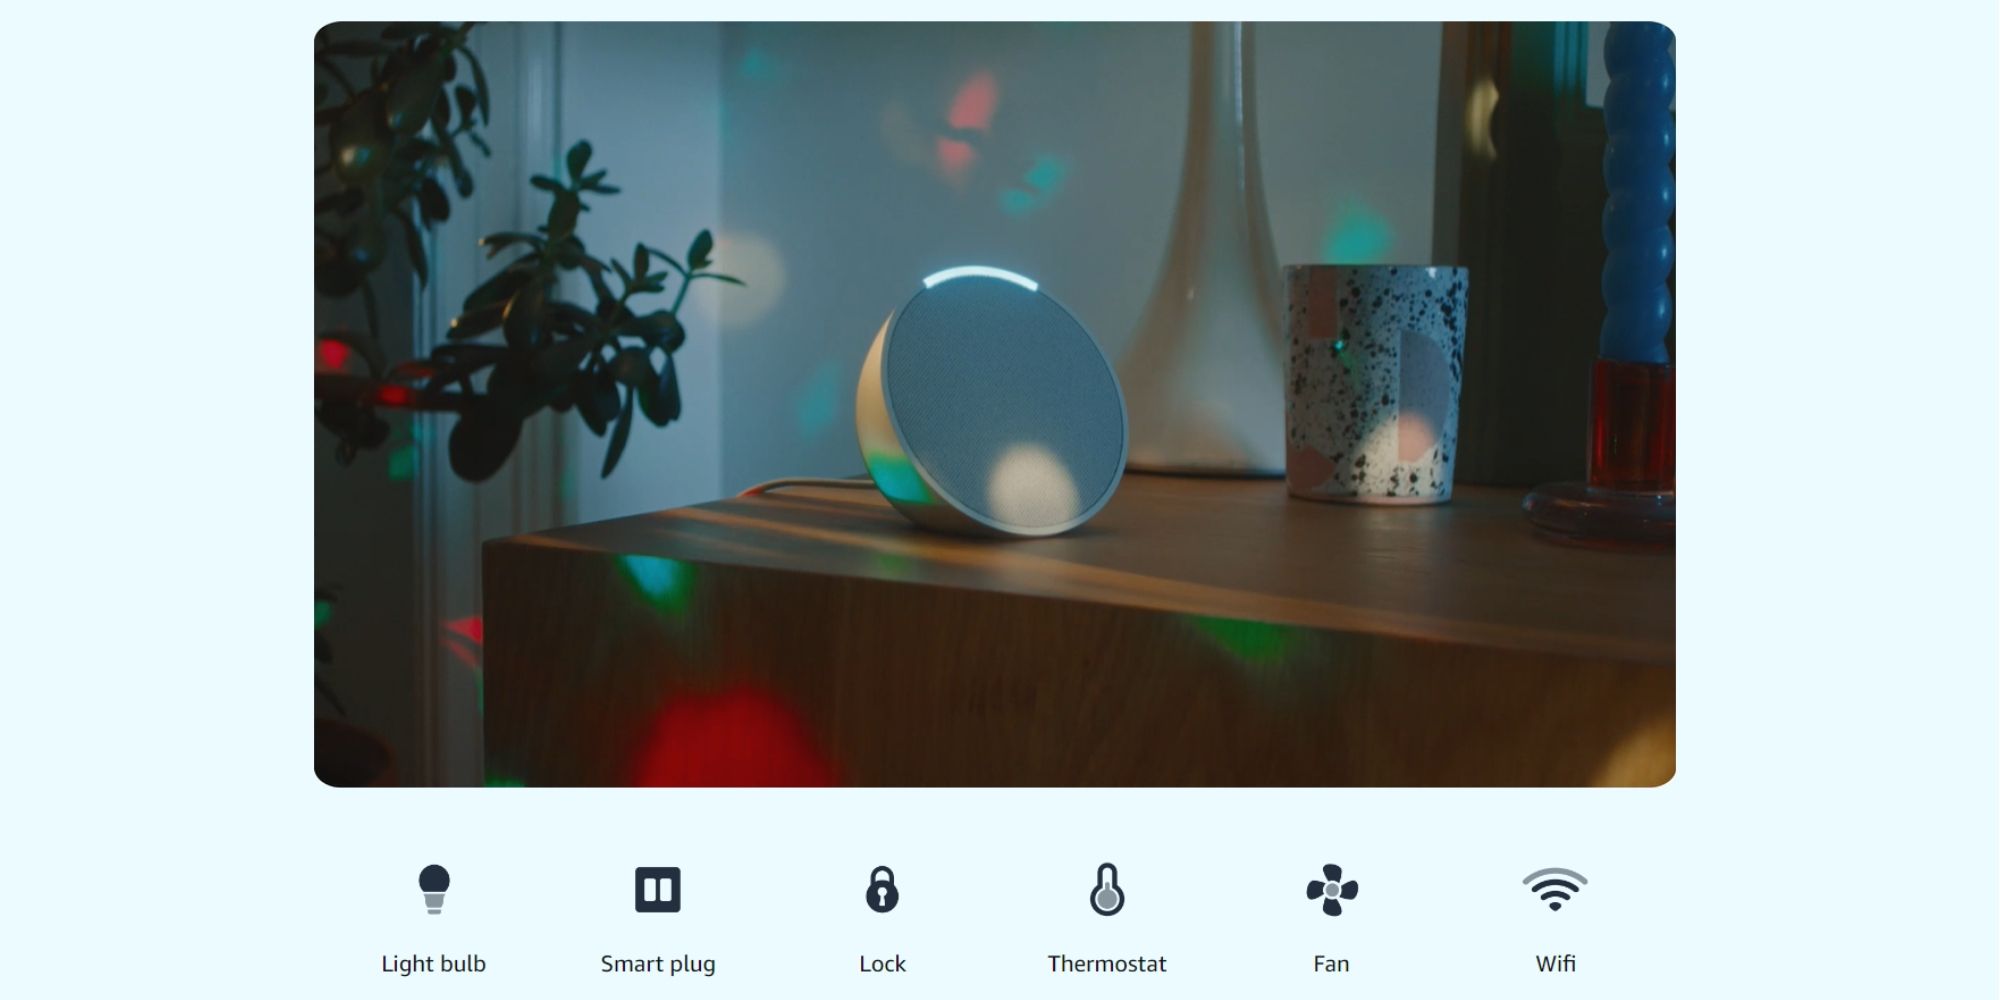 Amazon Echo Pop as a smart home control device